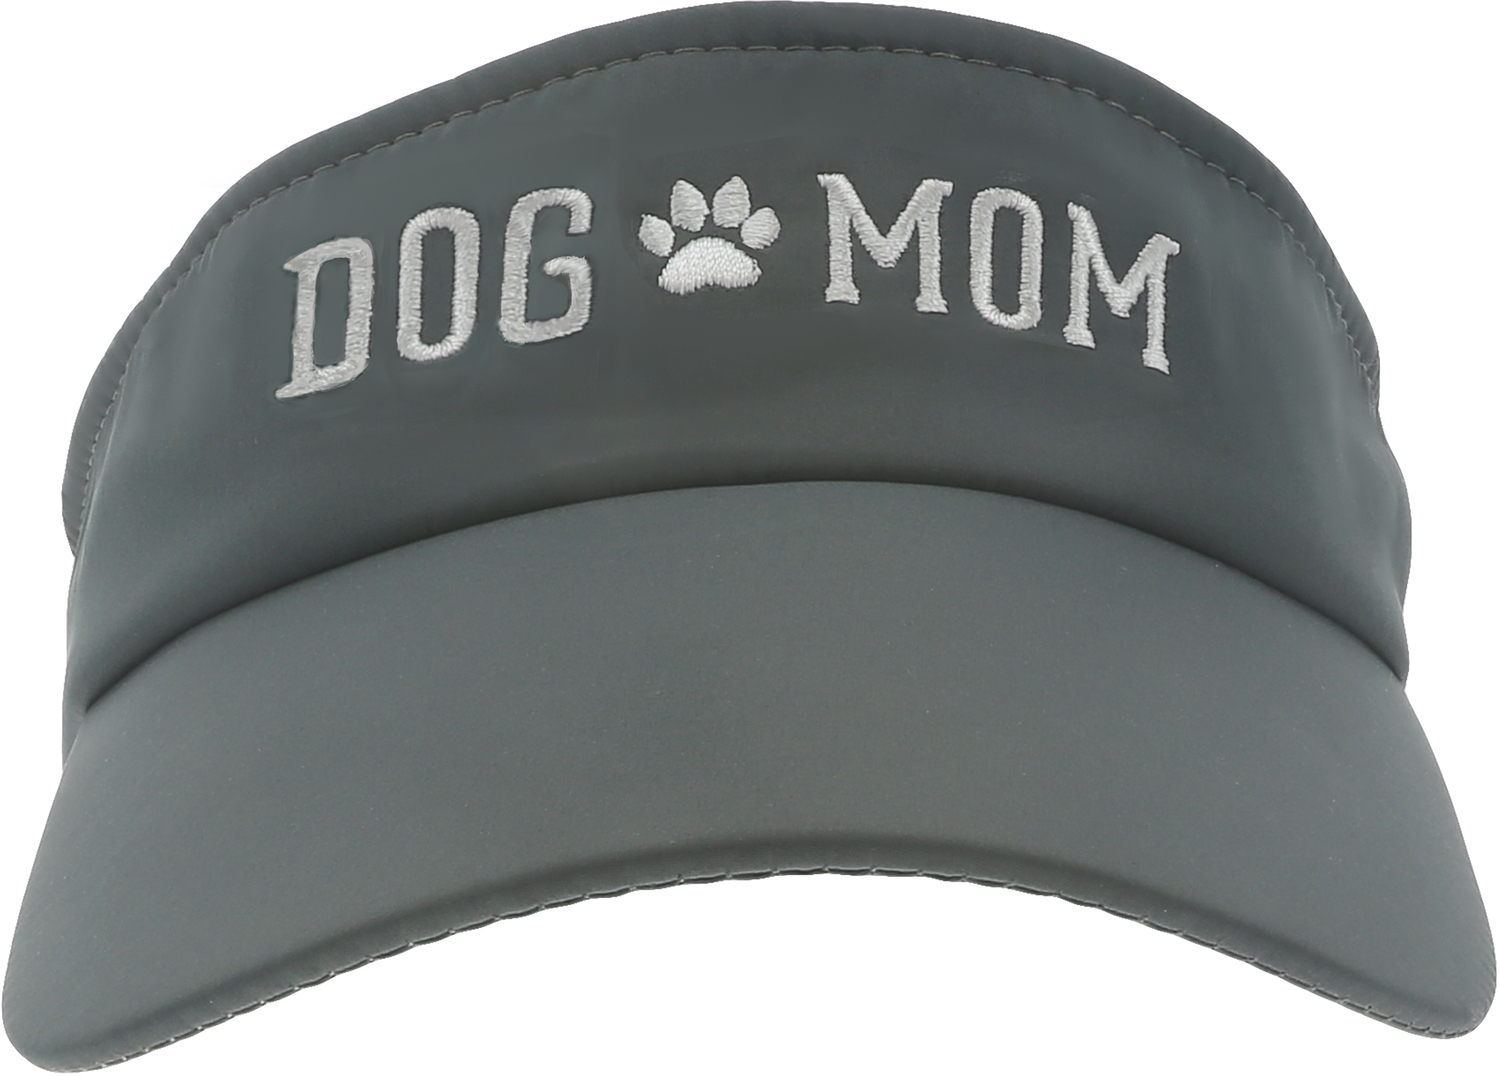 Dog Mom by We People - Dog Mom - Dark Gray Dri-Fit Visor